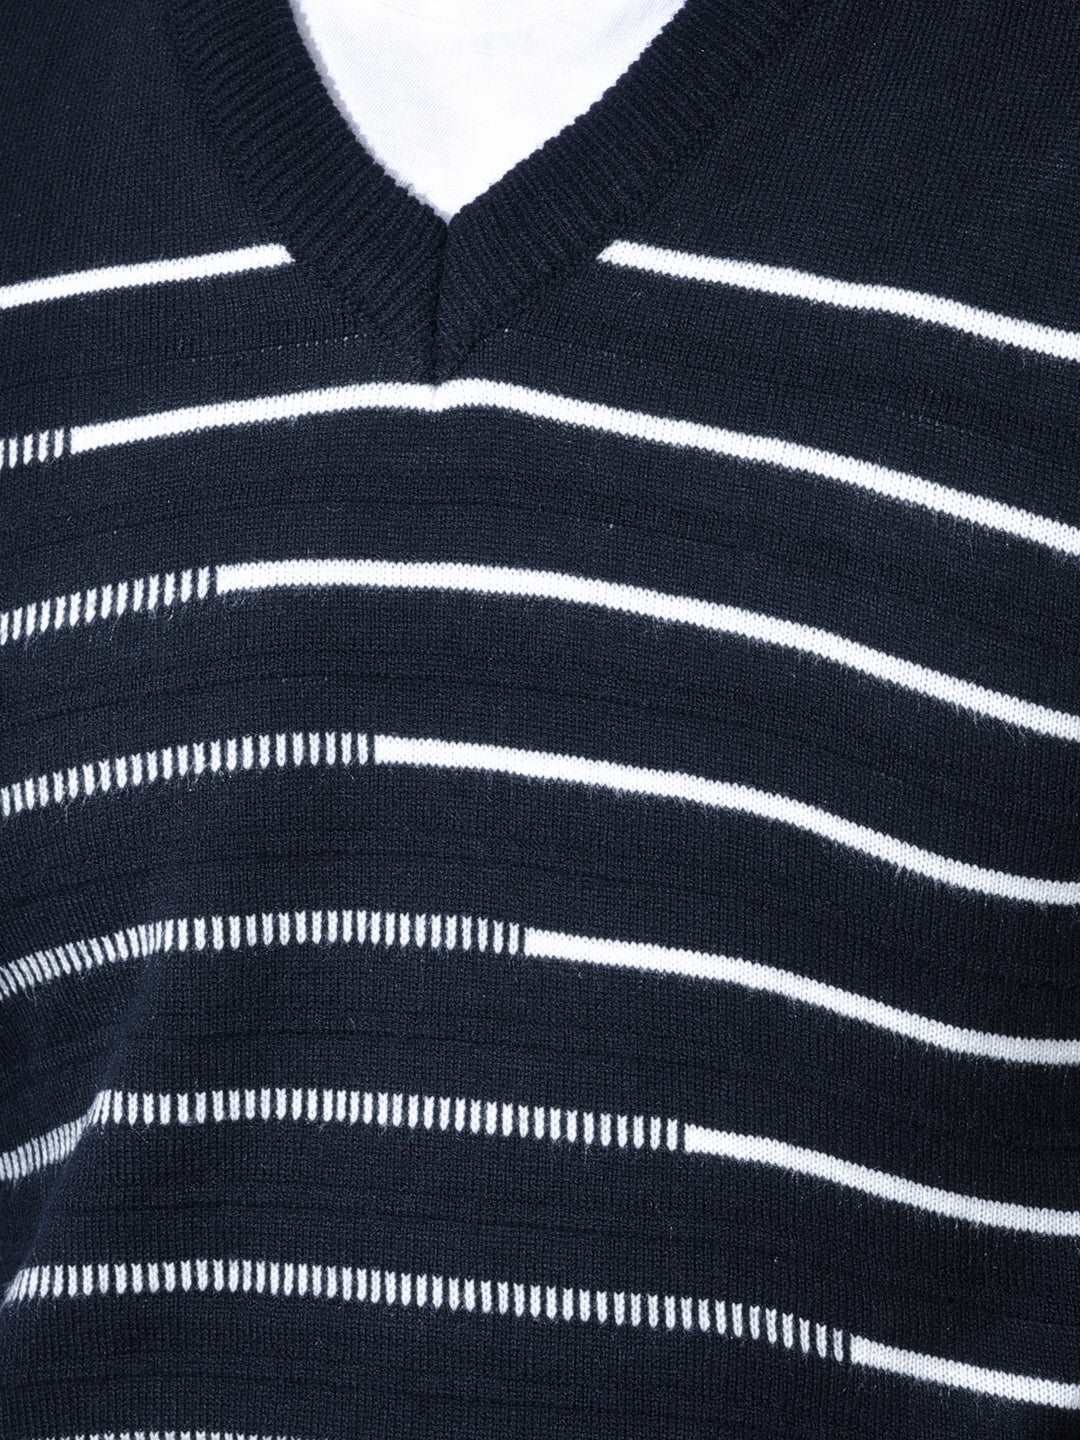 Cobb Black Striped V Neck Sleeveless Sweater